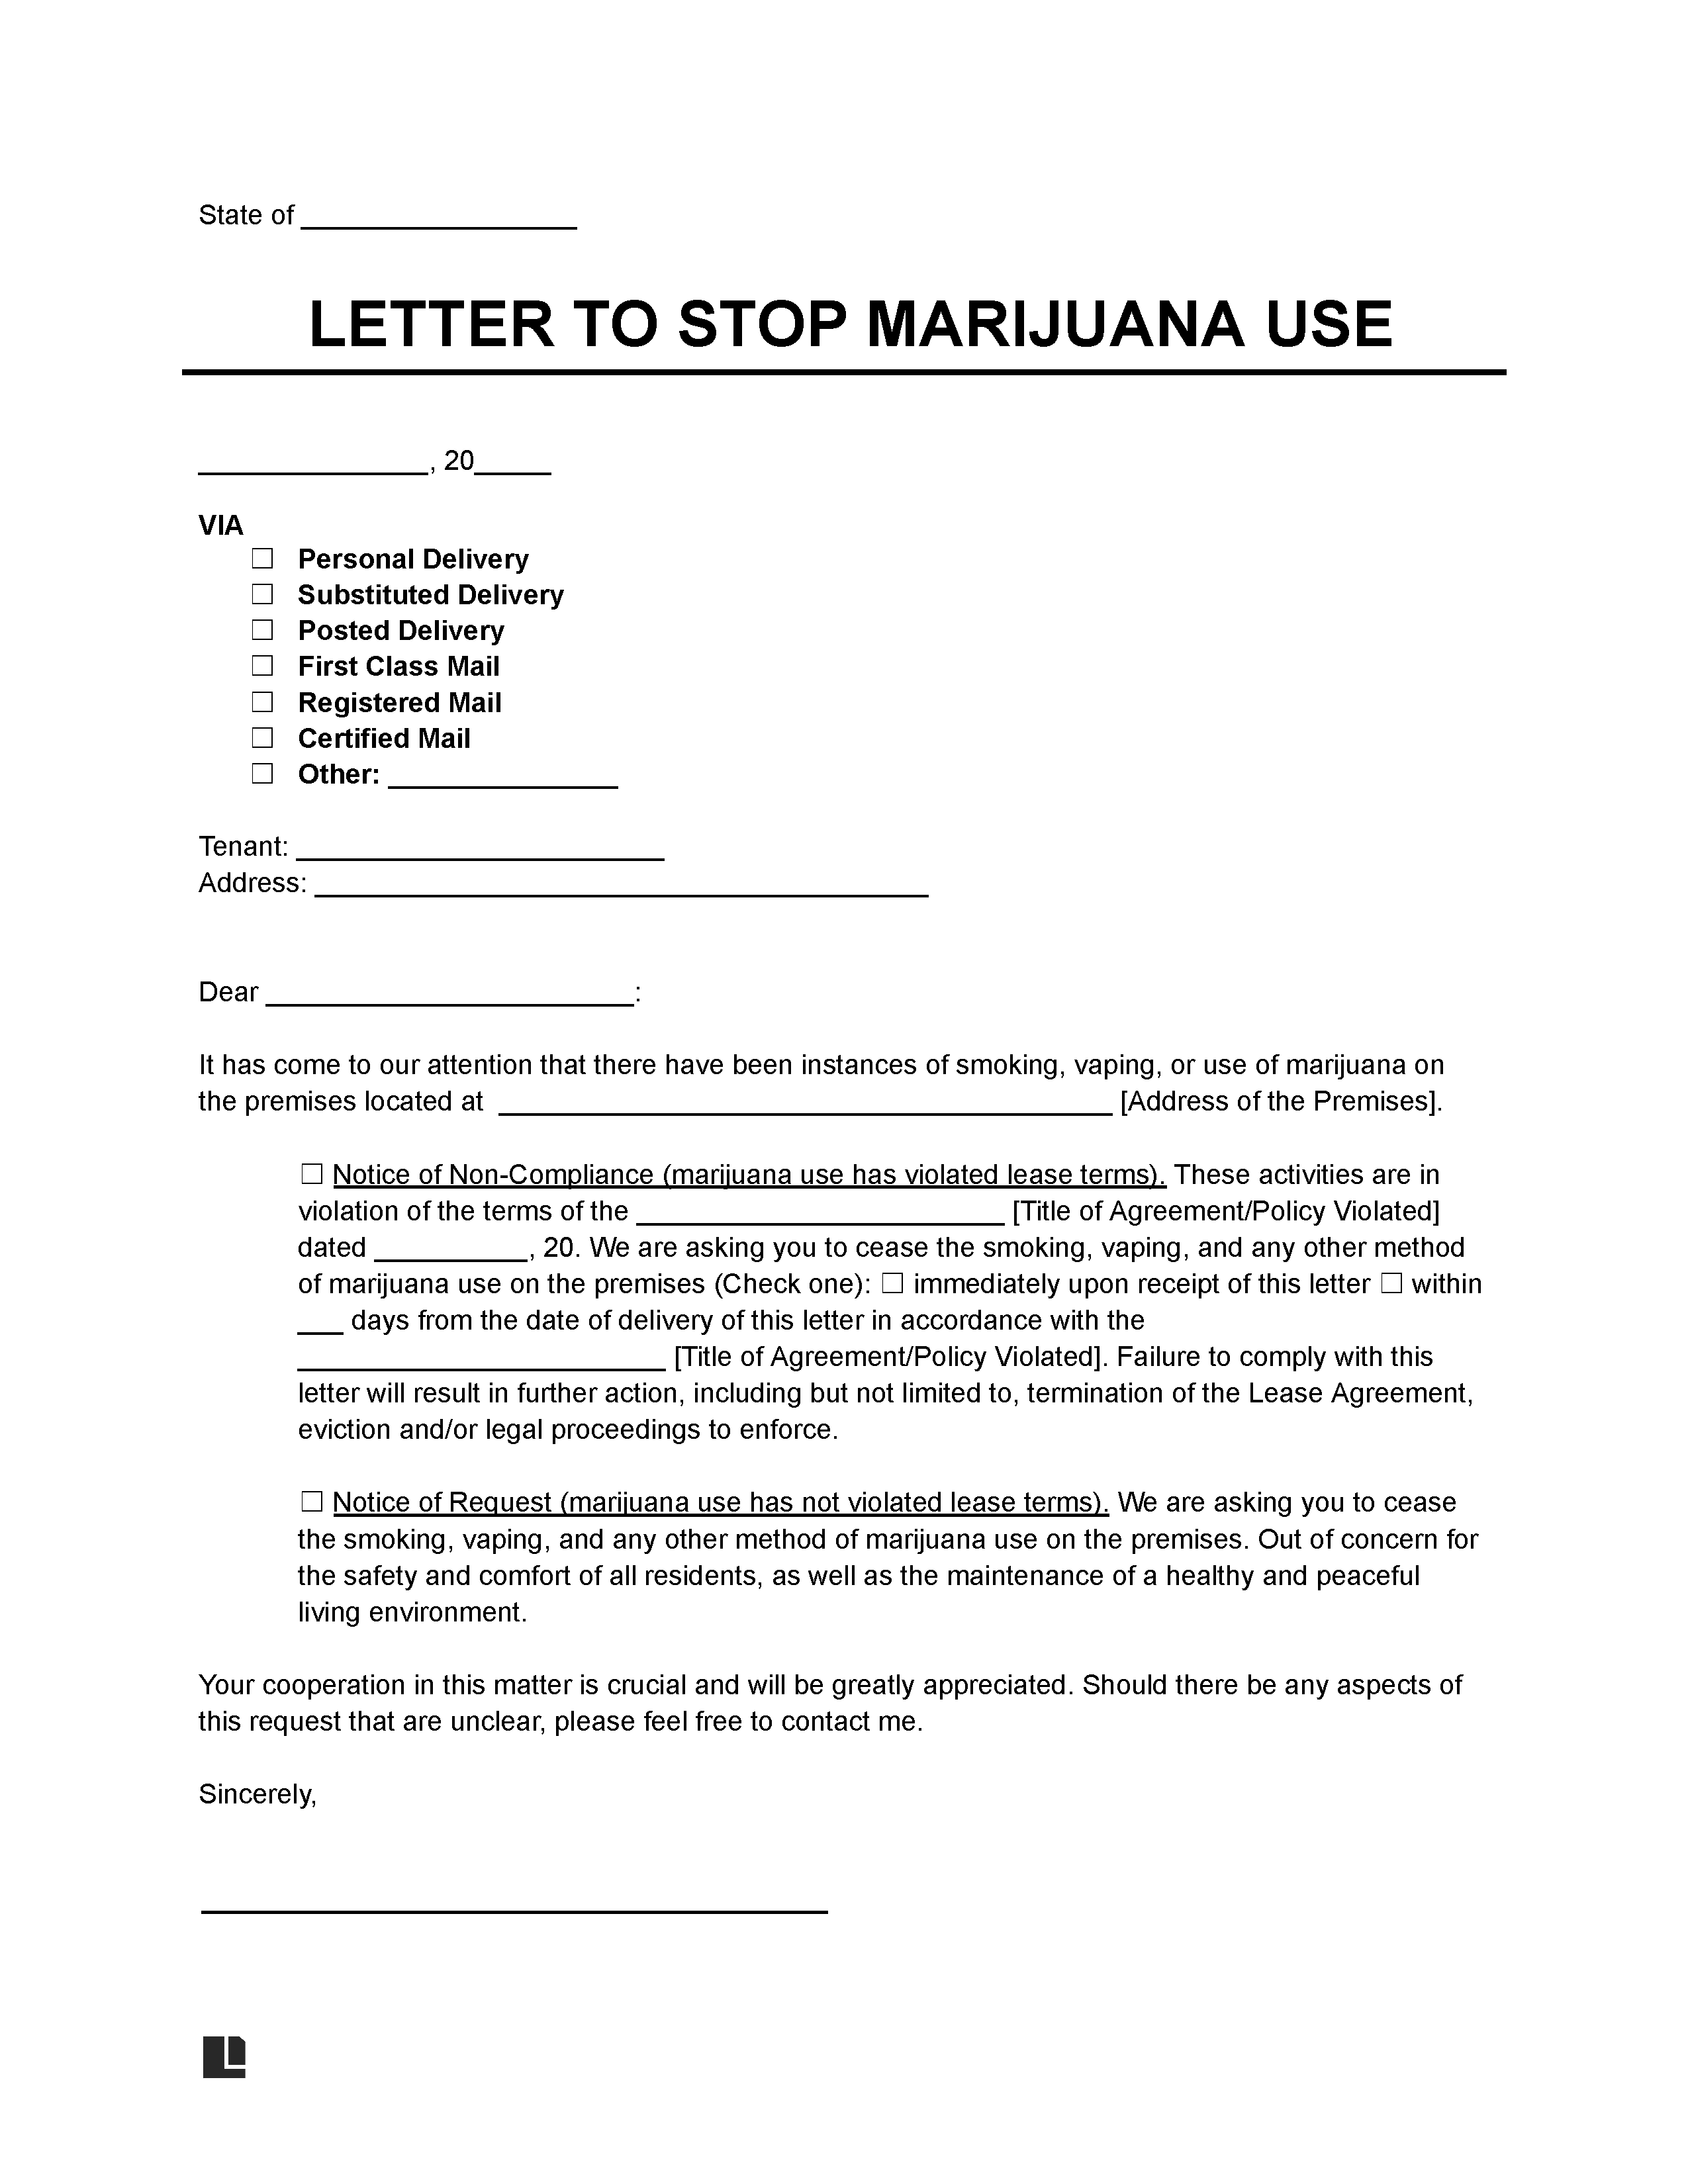 Warning Letter for Smoking Marijuana Template